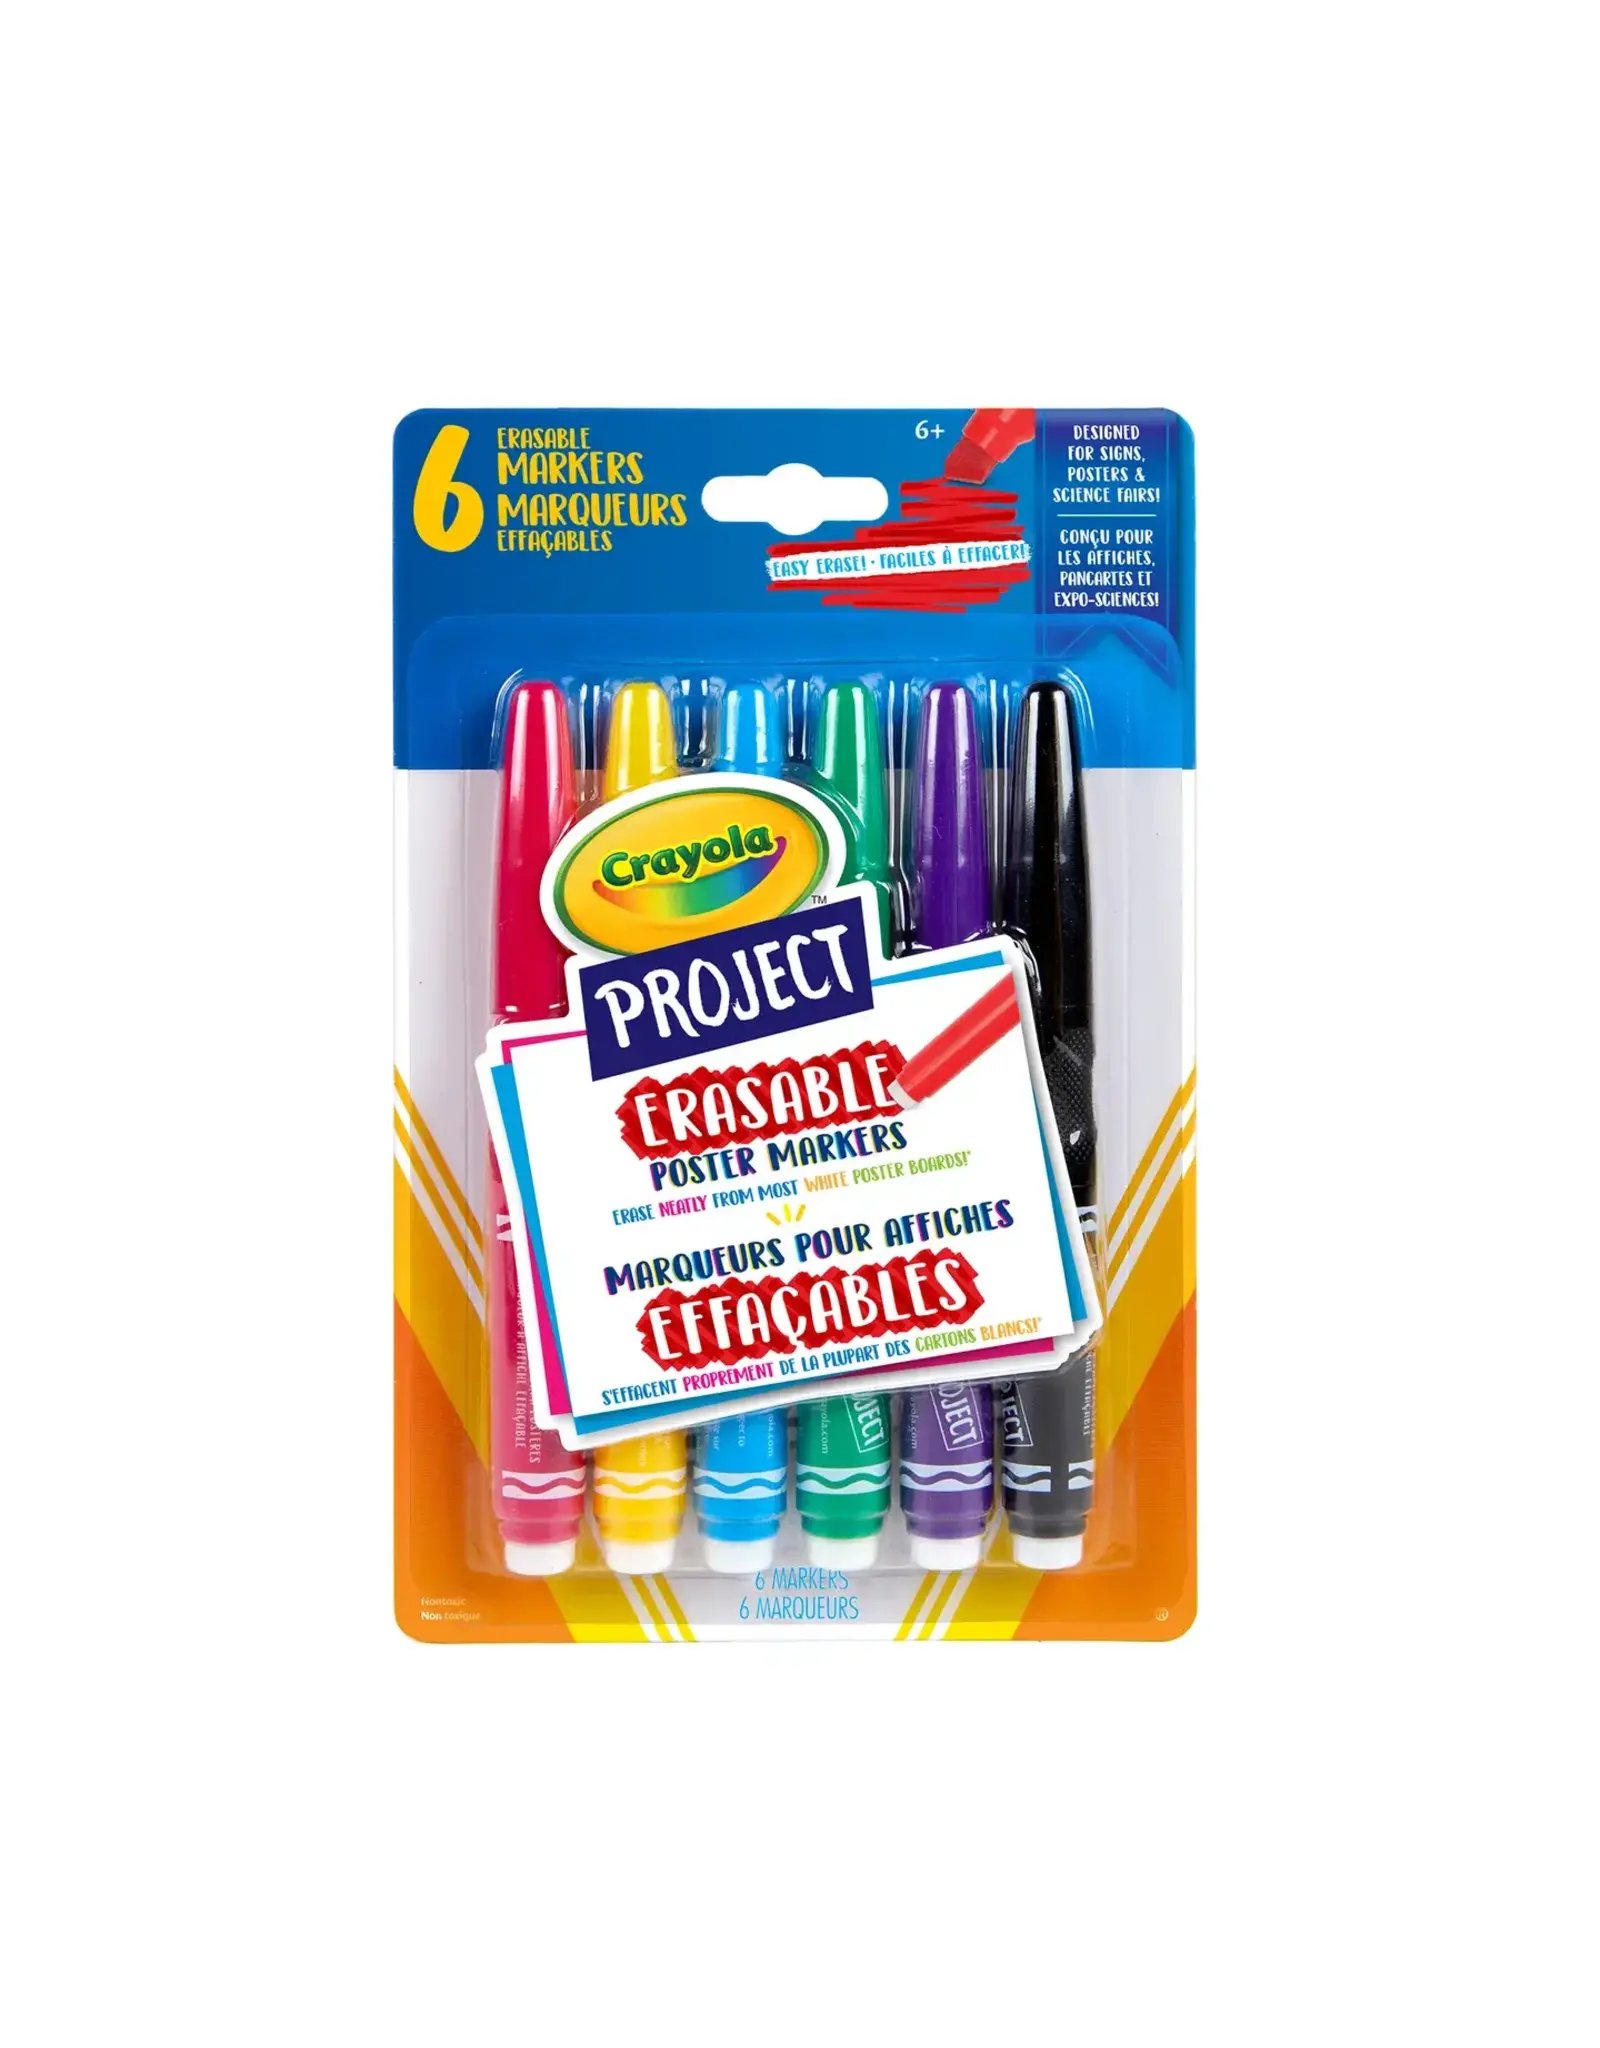 Crayola Crayola Project Erasable Poster Markers 6 Count